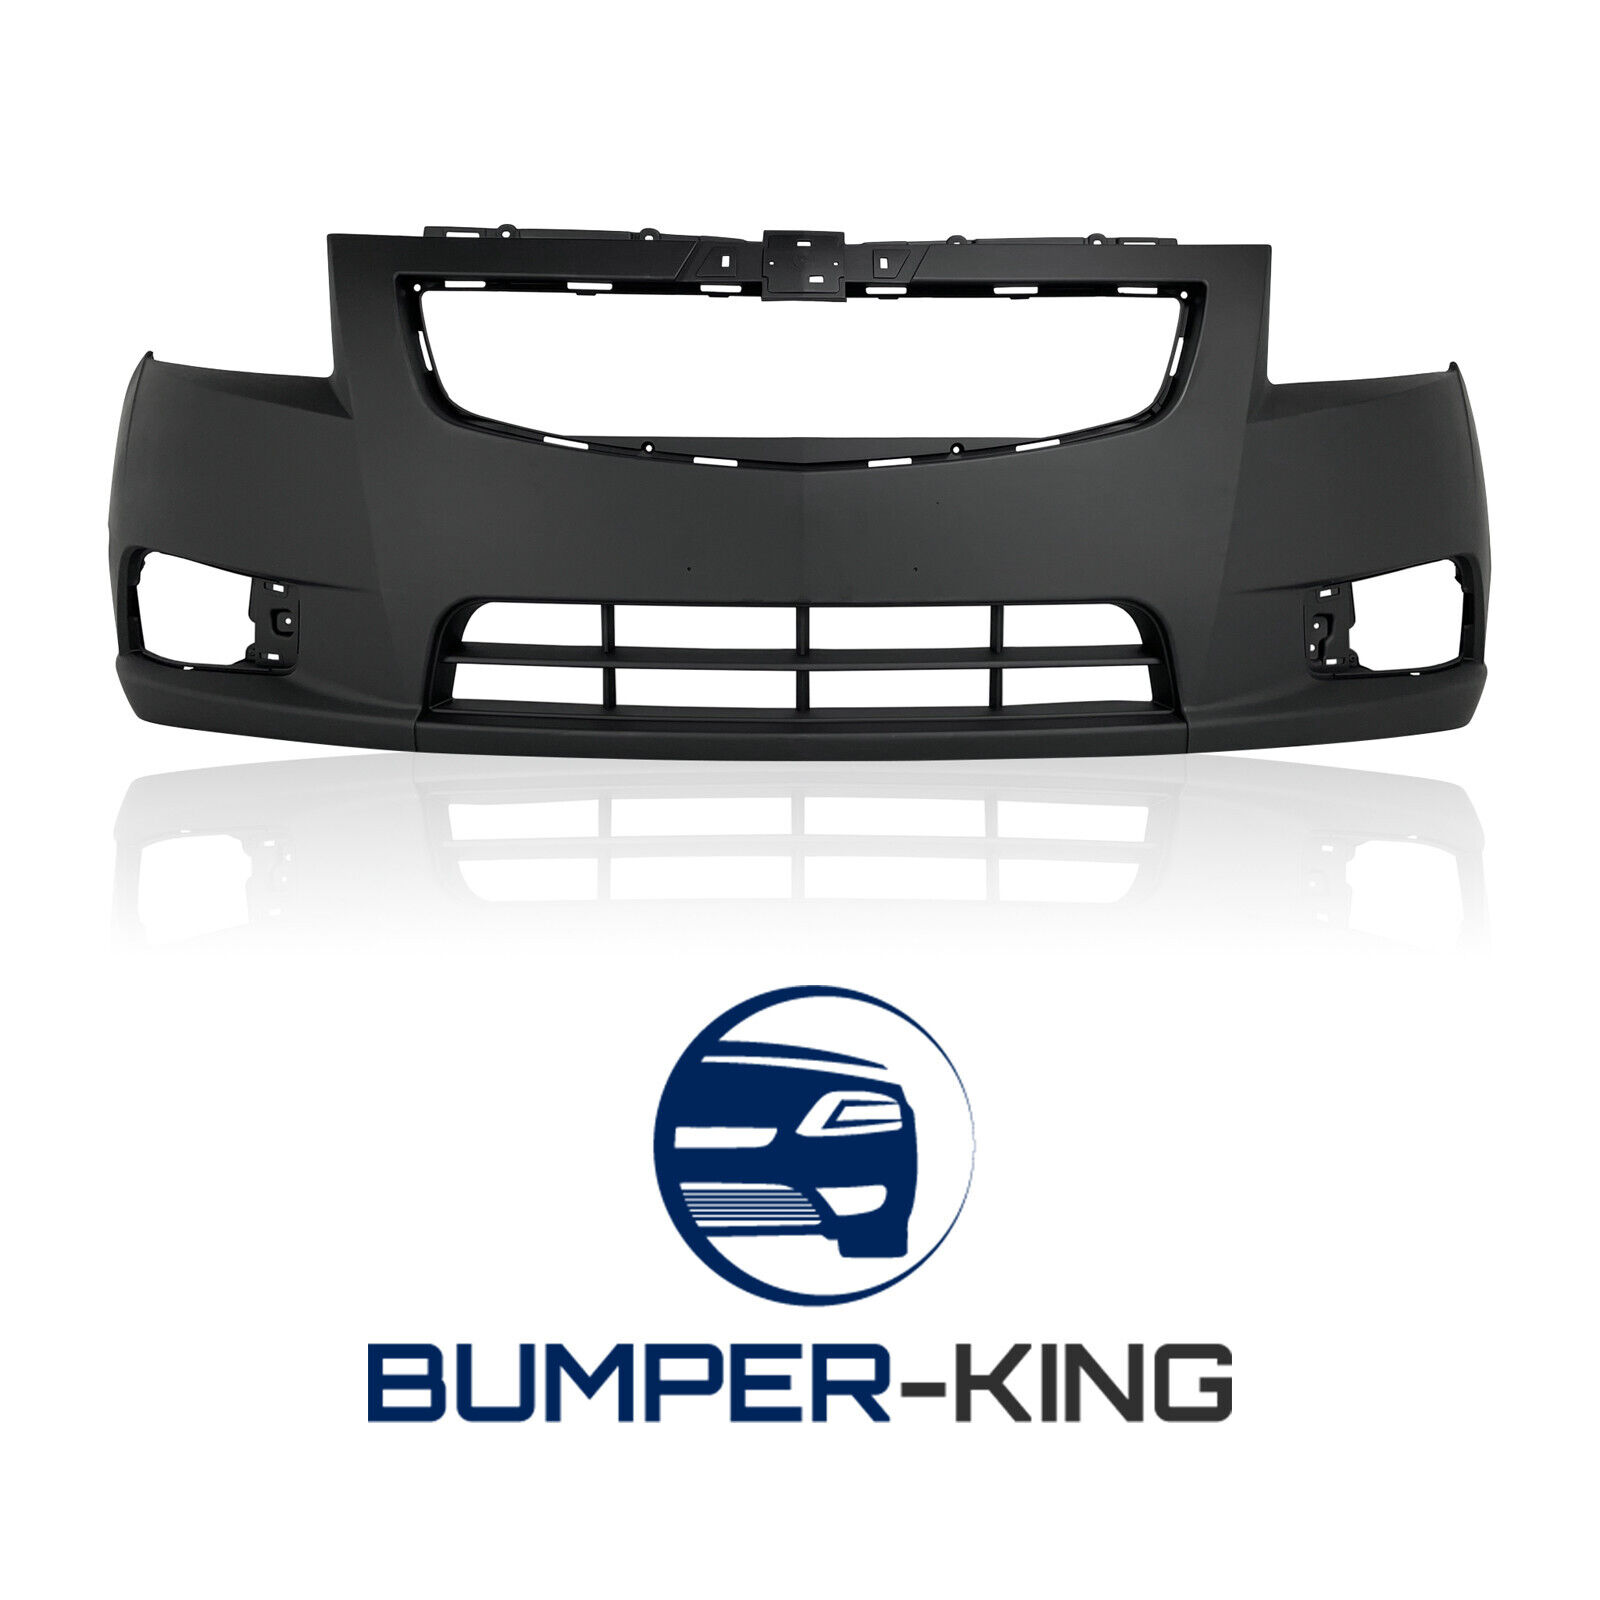 BUMPER-KING Primered Front Bumper Cover for 2011-2014 Chevy Cruze LS LT LTZ Eco